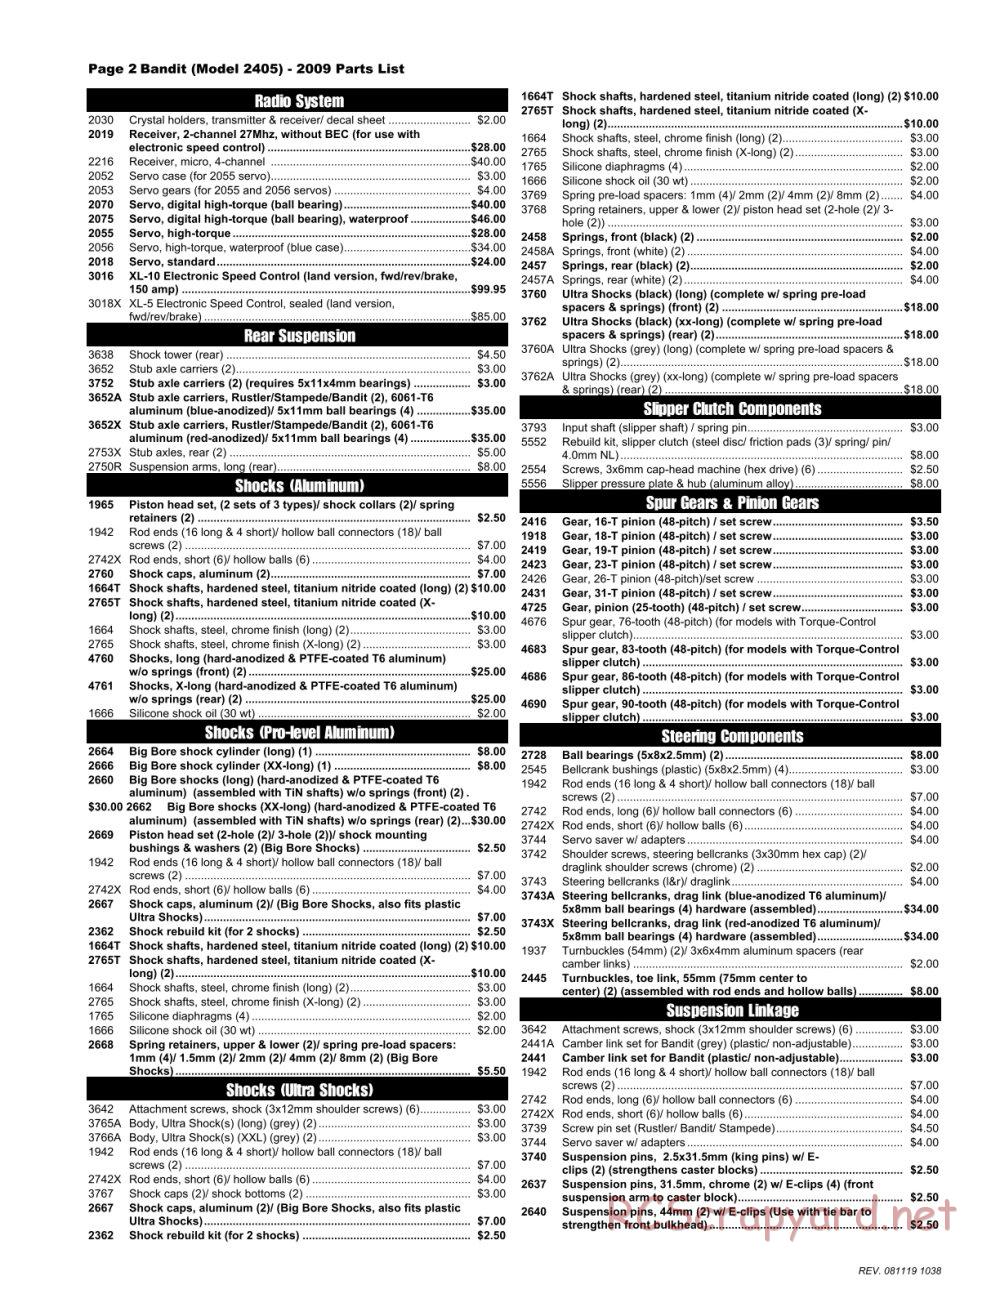 Traxxas - Bandit XL-5 - Parts List - Page 2